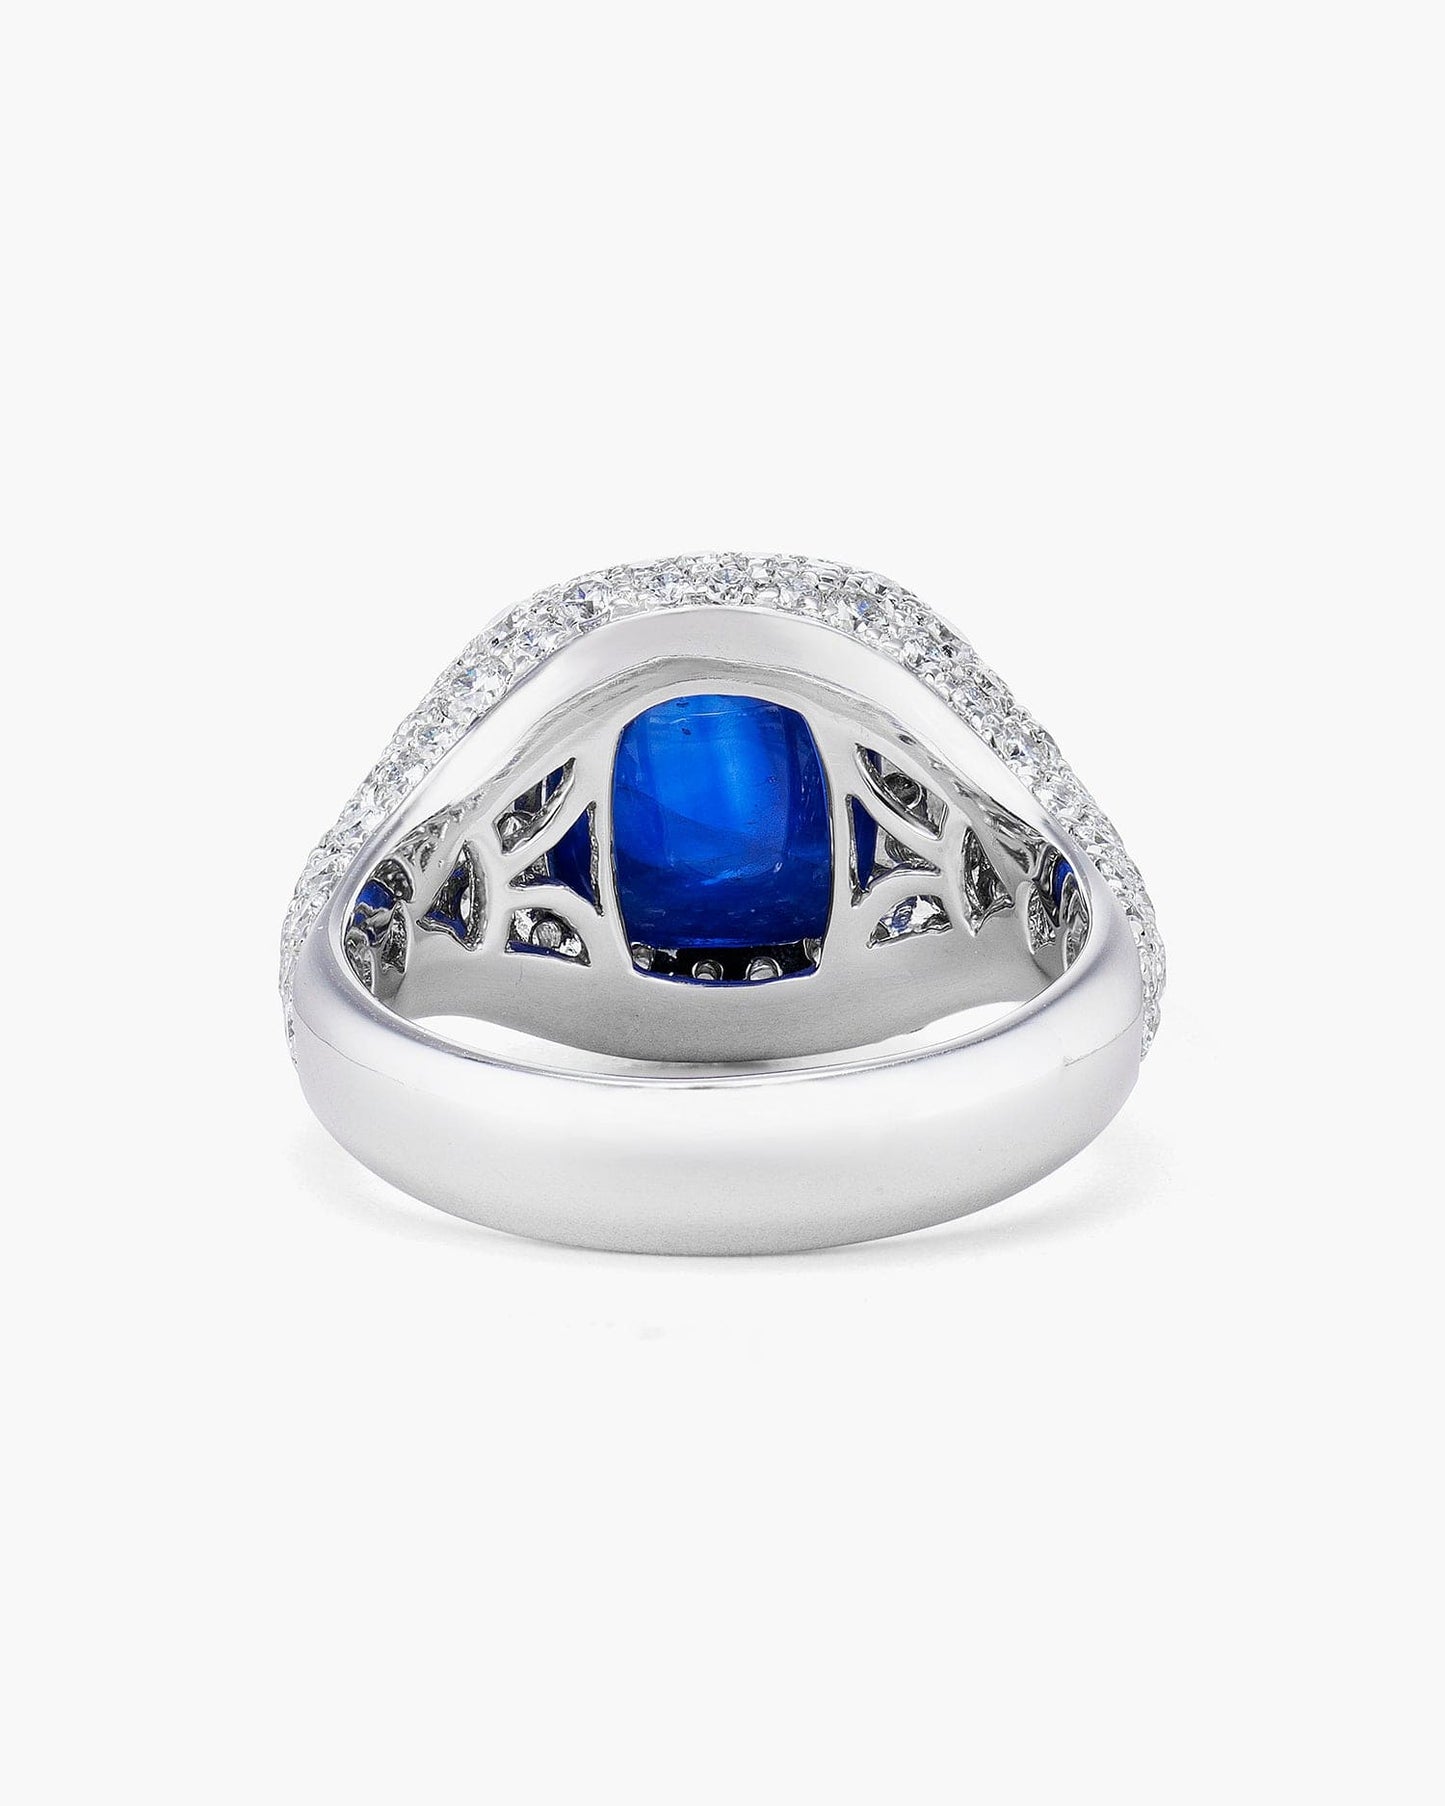 6.28 carat Cabochon Madagascar Sapphire and Diamond Ring